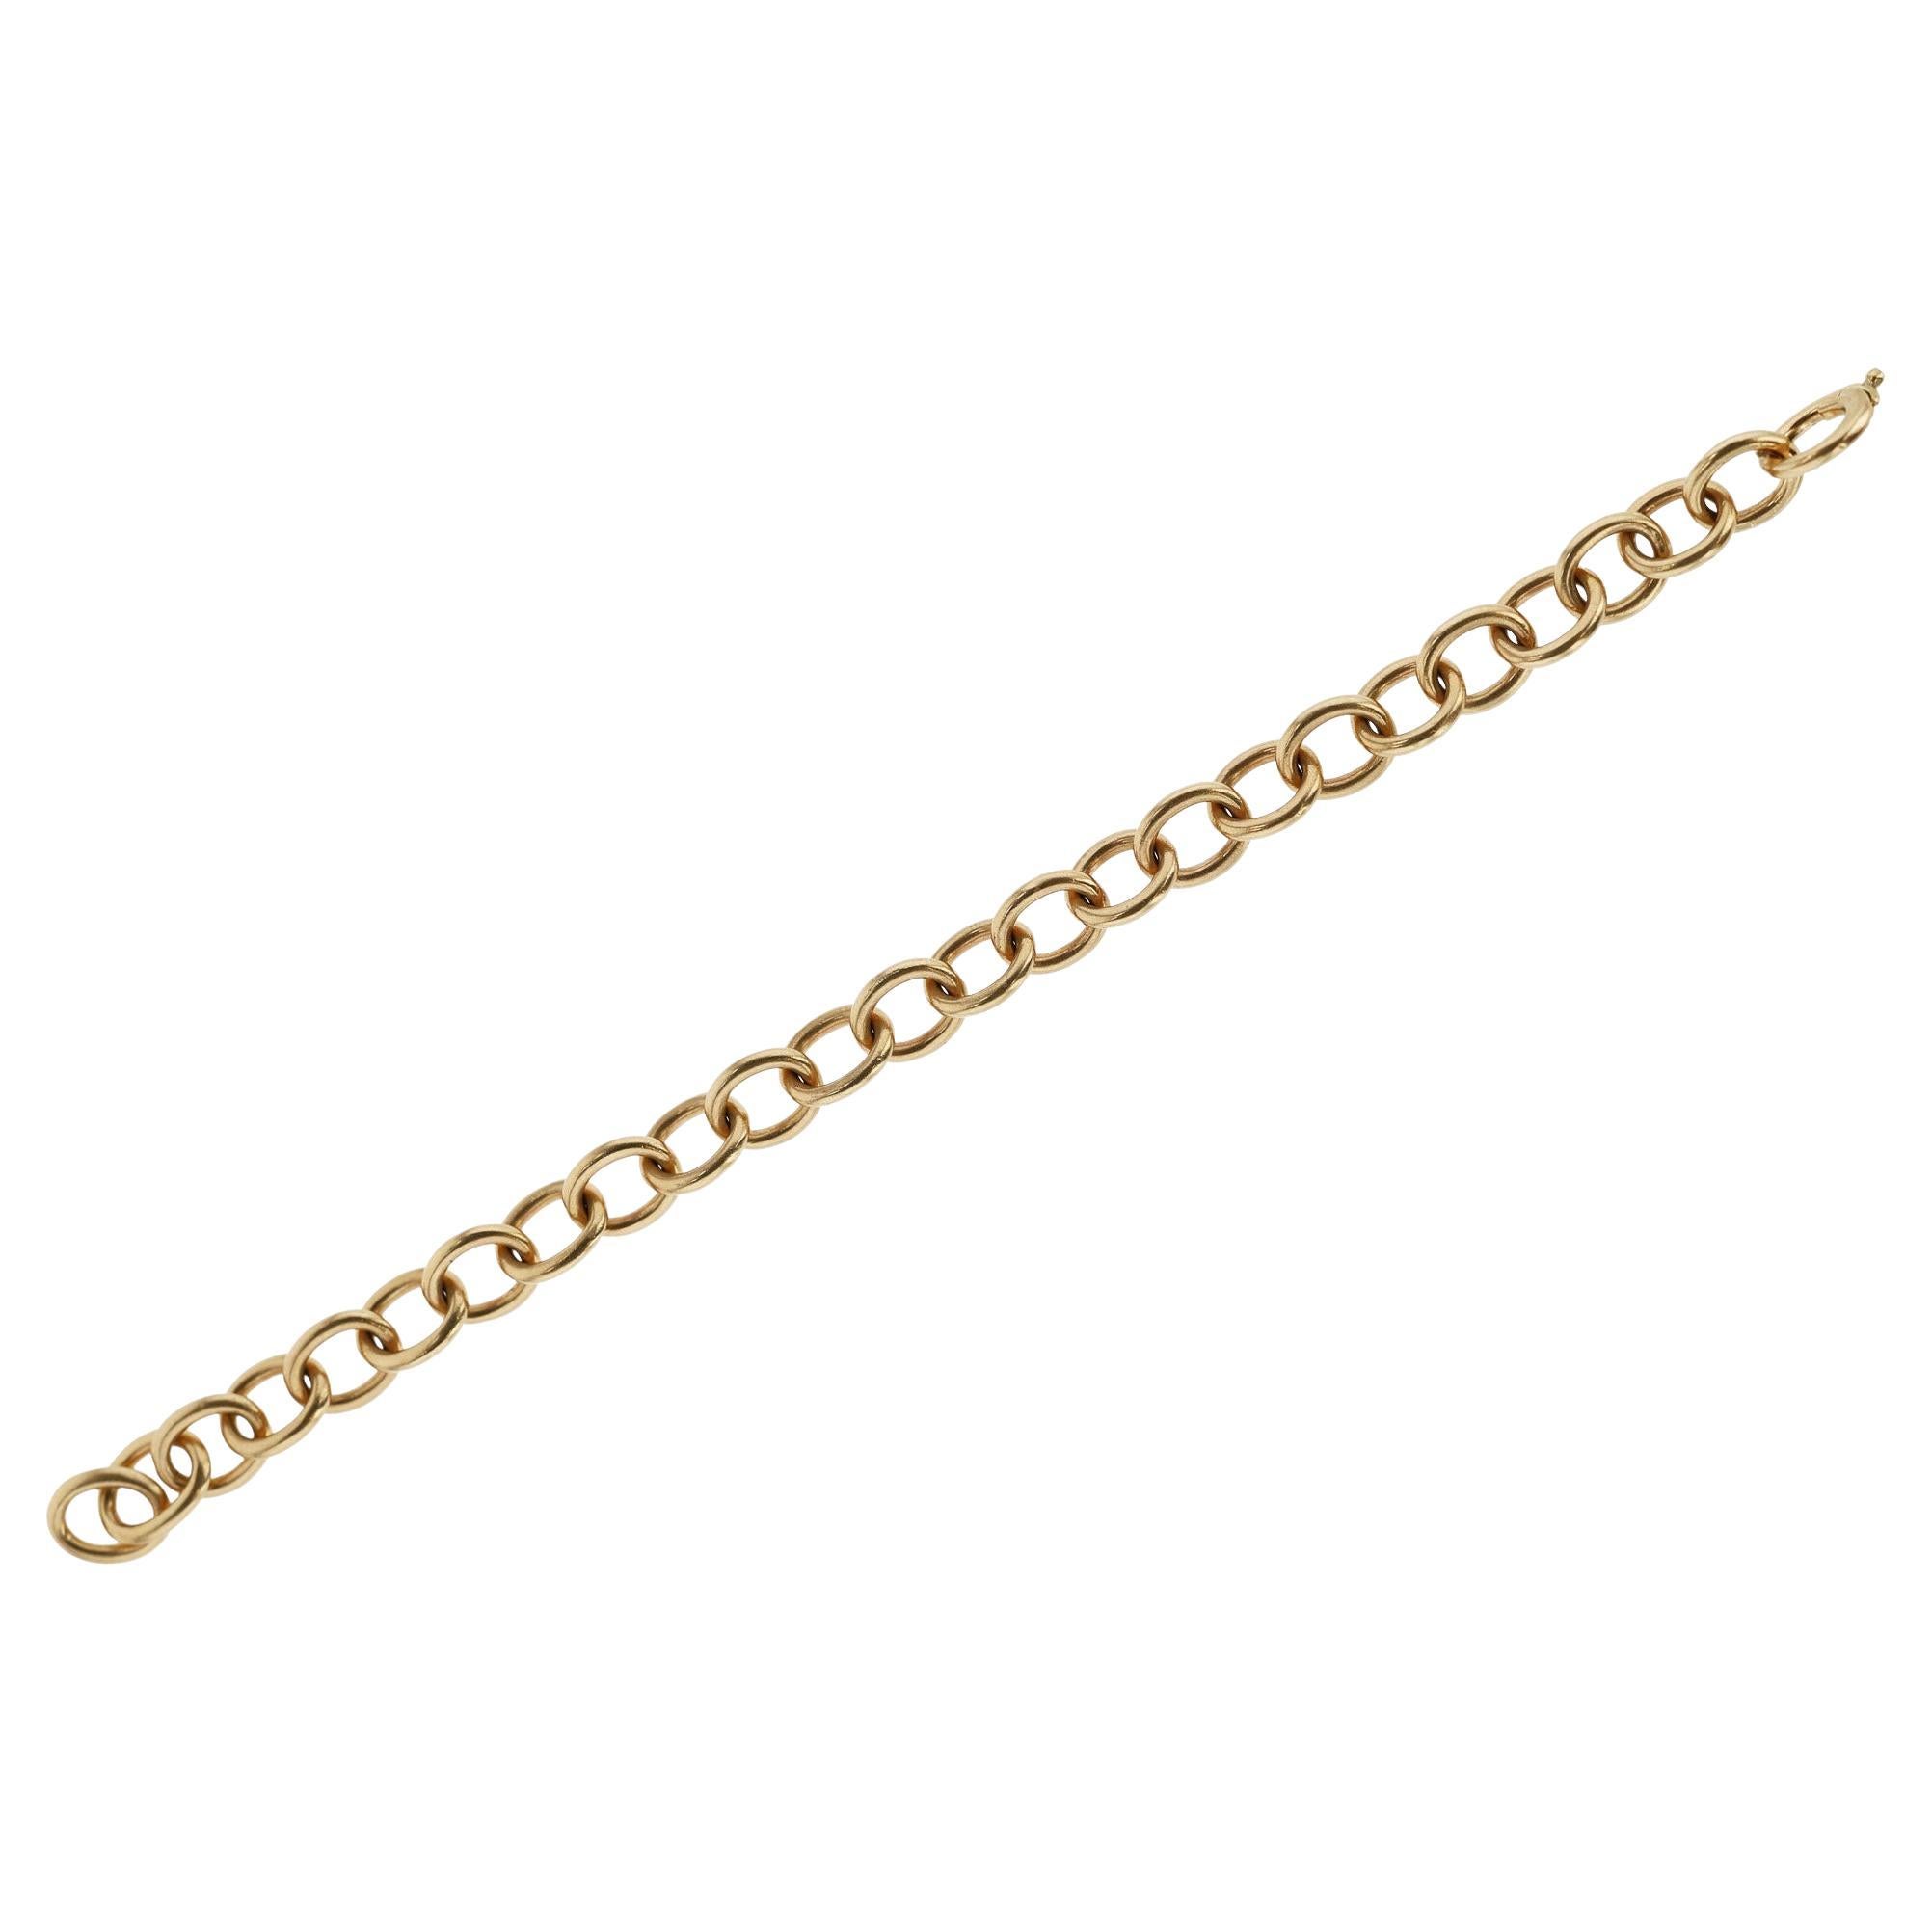 Signed Estate Jewelry Cartier 14k Gold Oval Link Bracelet